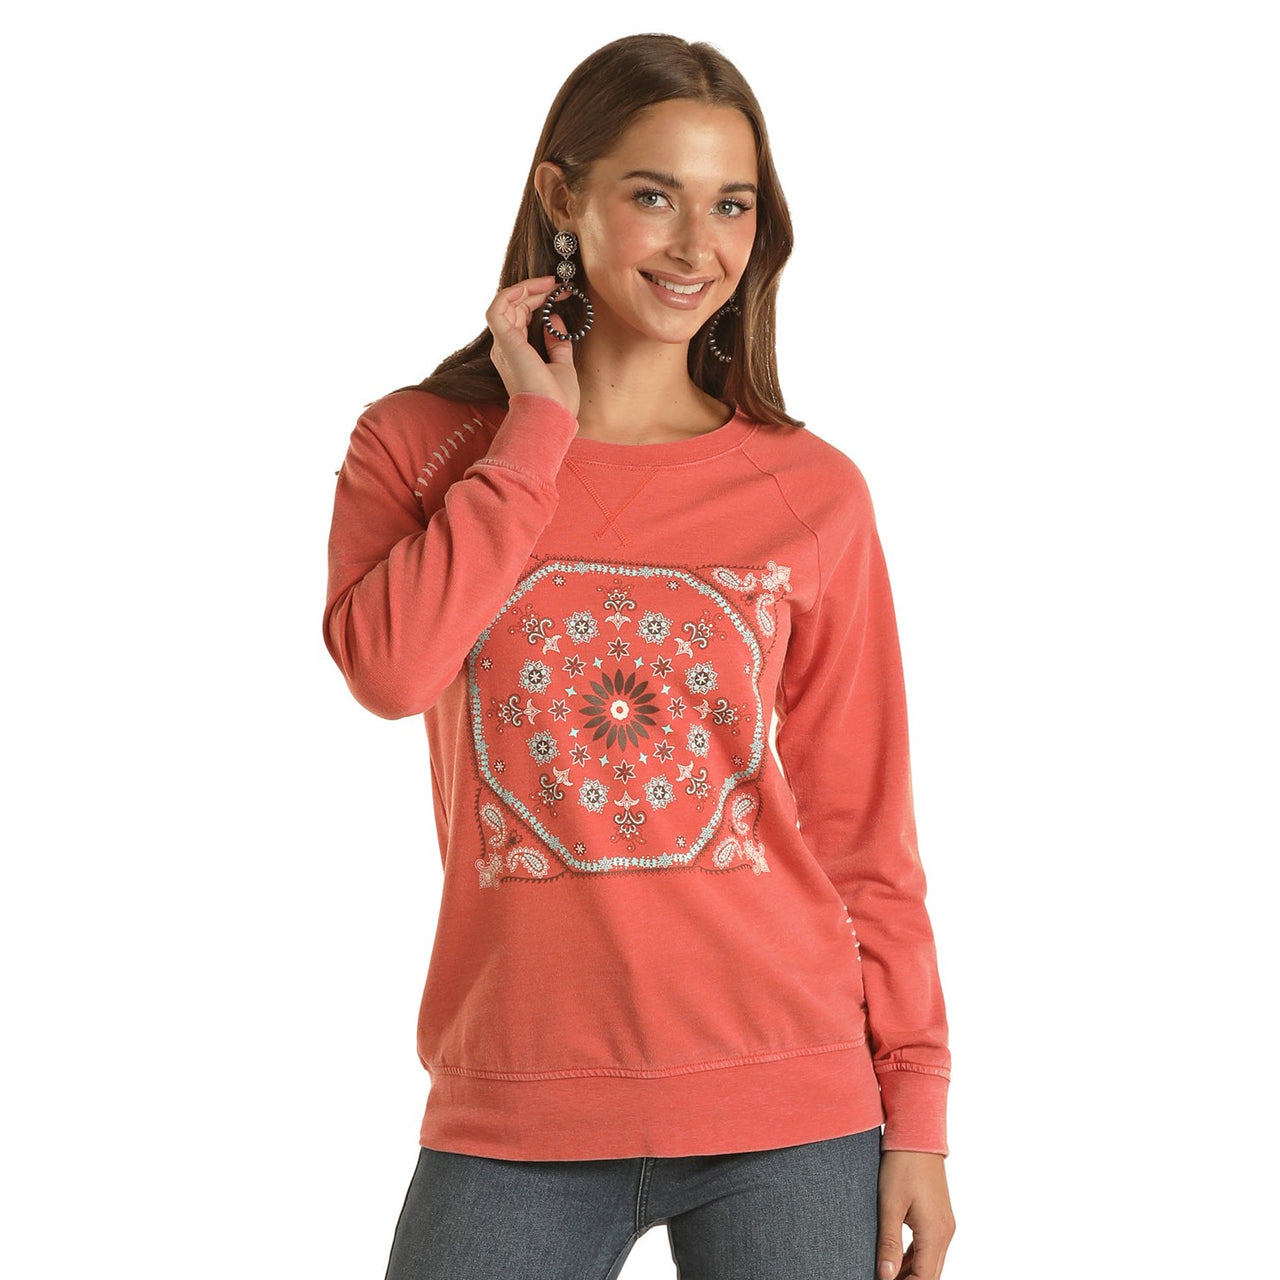 White Label Women's Bandana Graphic Sweatshirt - Coral